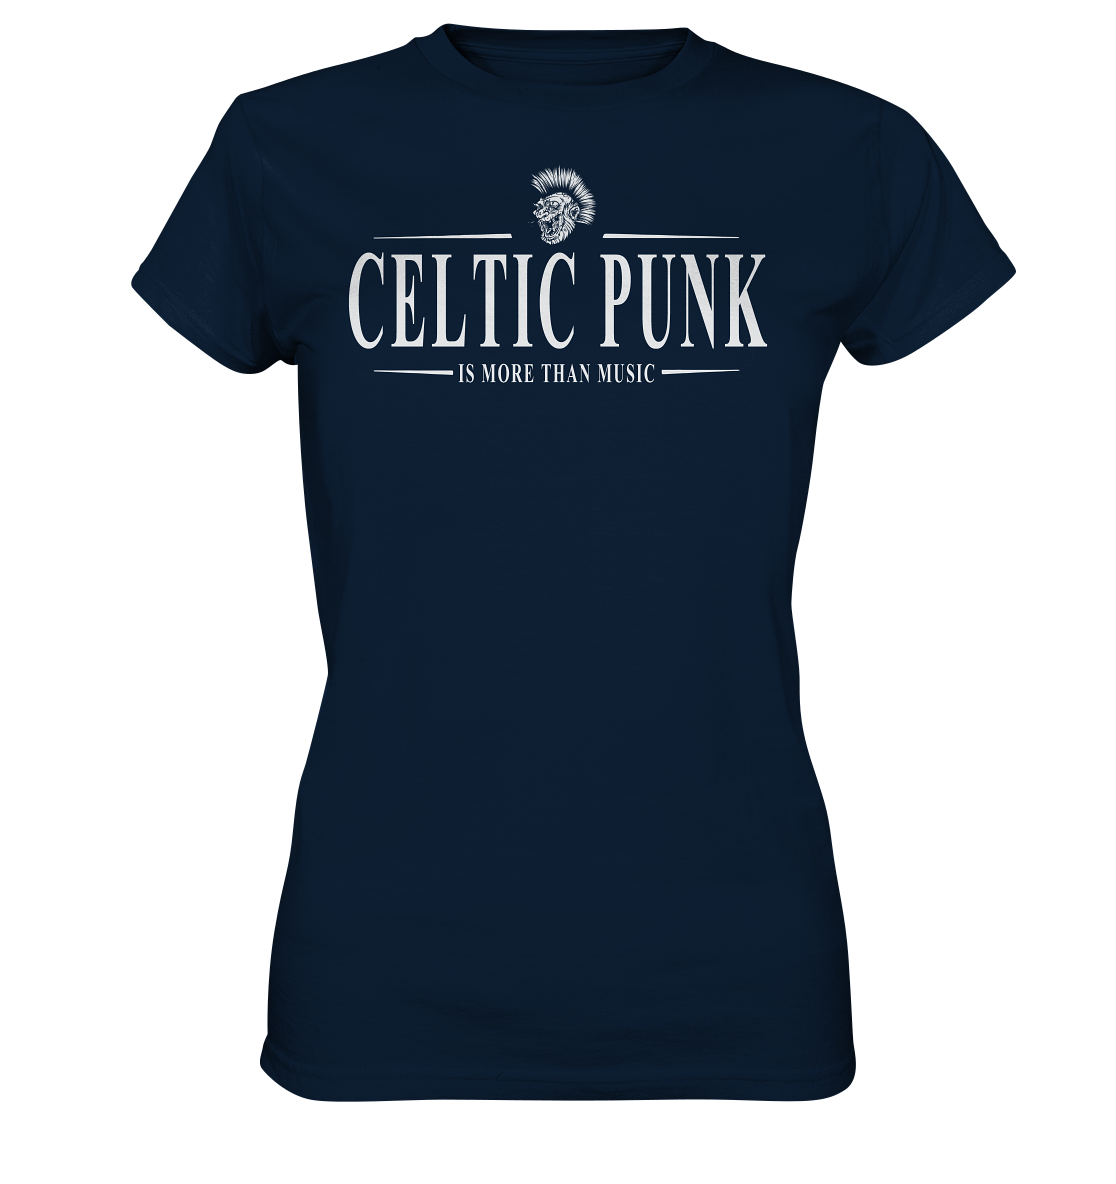 Celtic Punk "Is More Than Music" - Ladies Premium Shirt